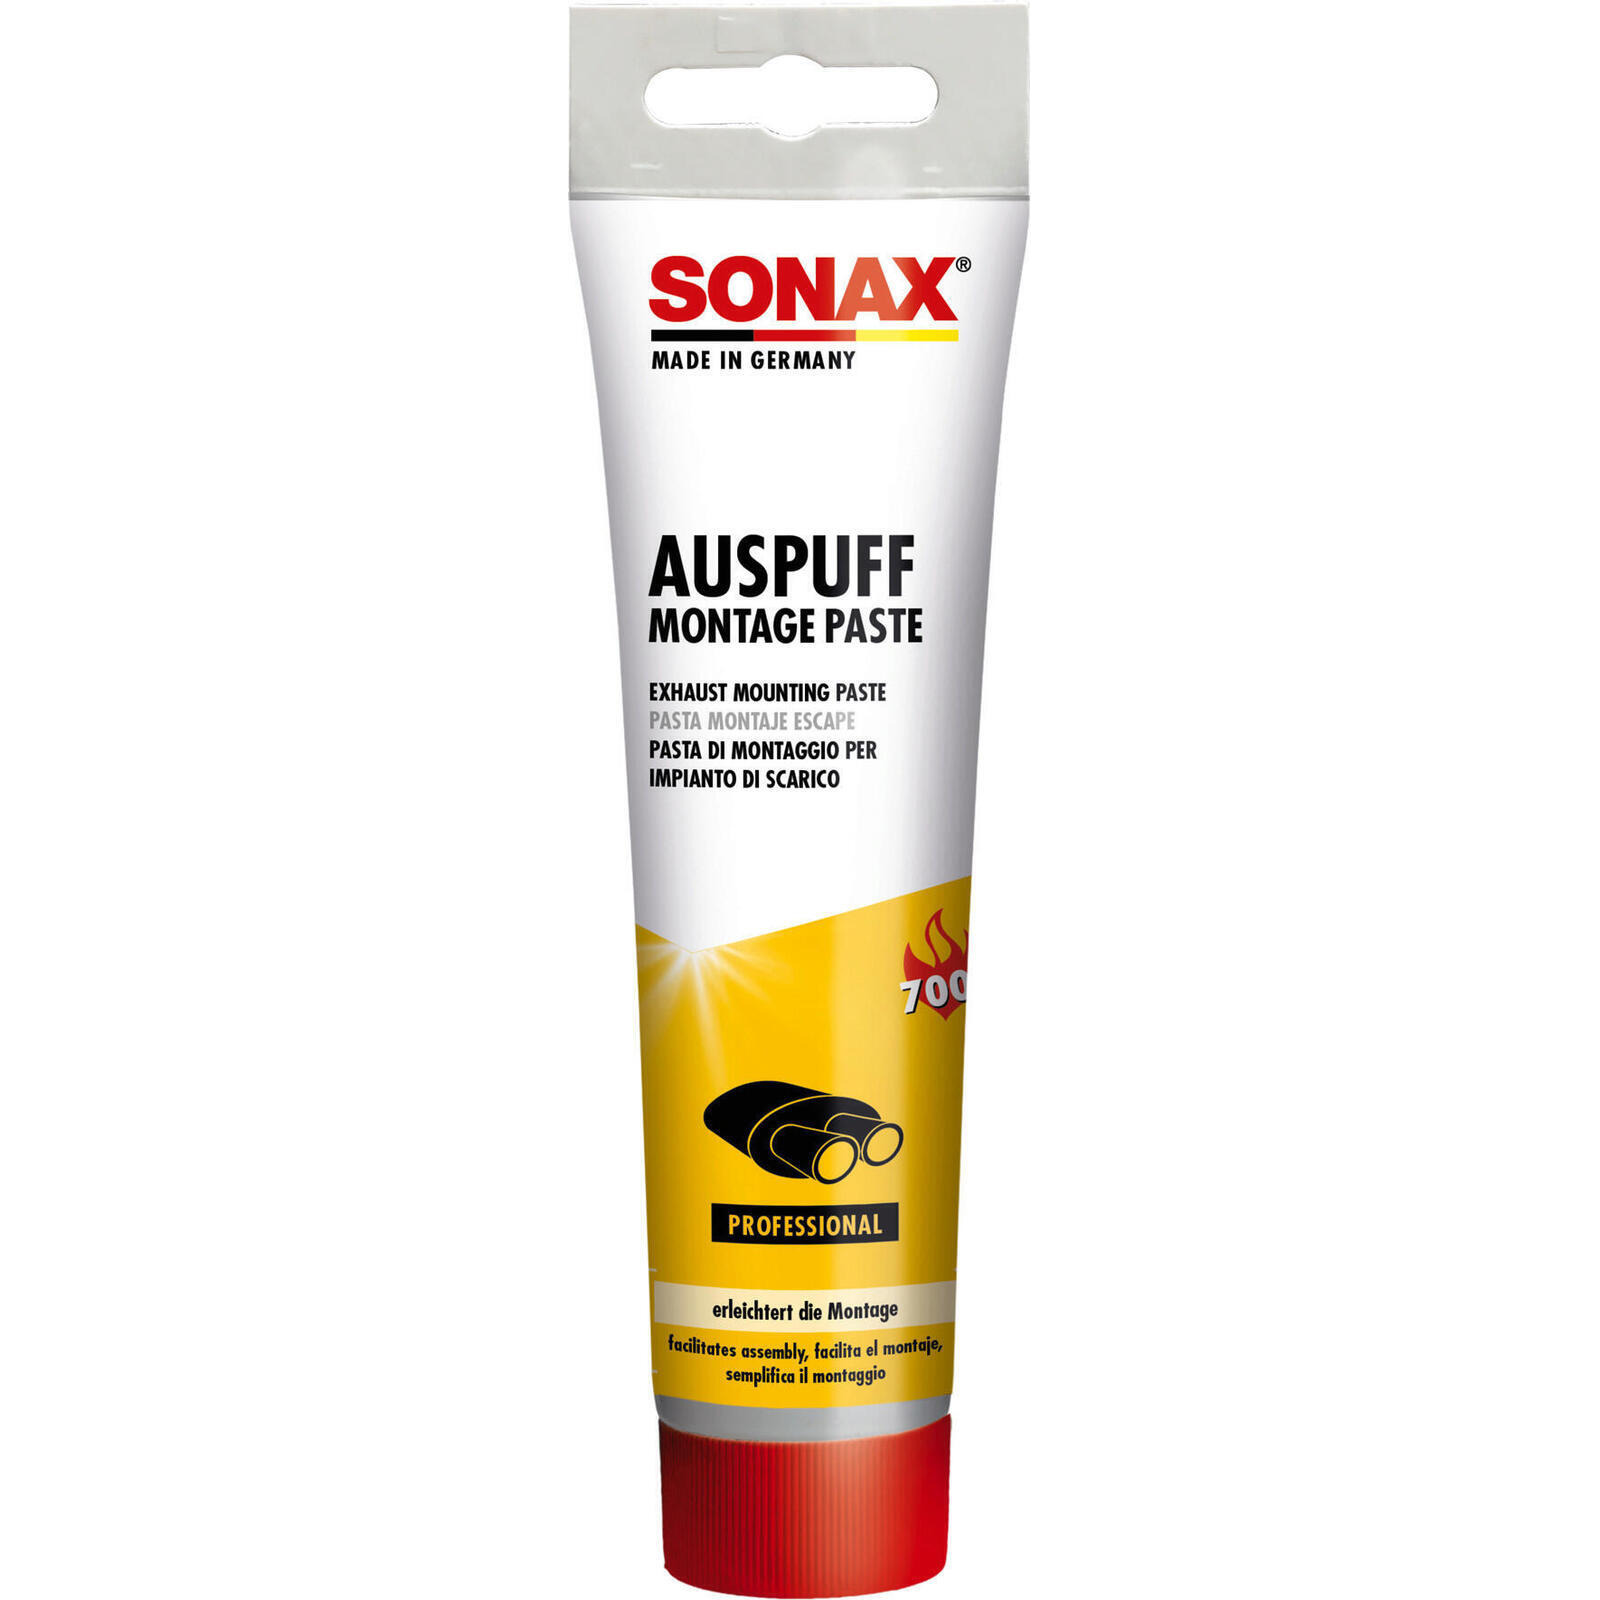 SONAX Montagepaste AuspuffMontagePaste